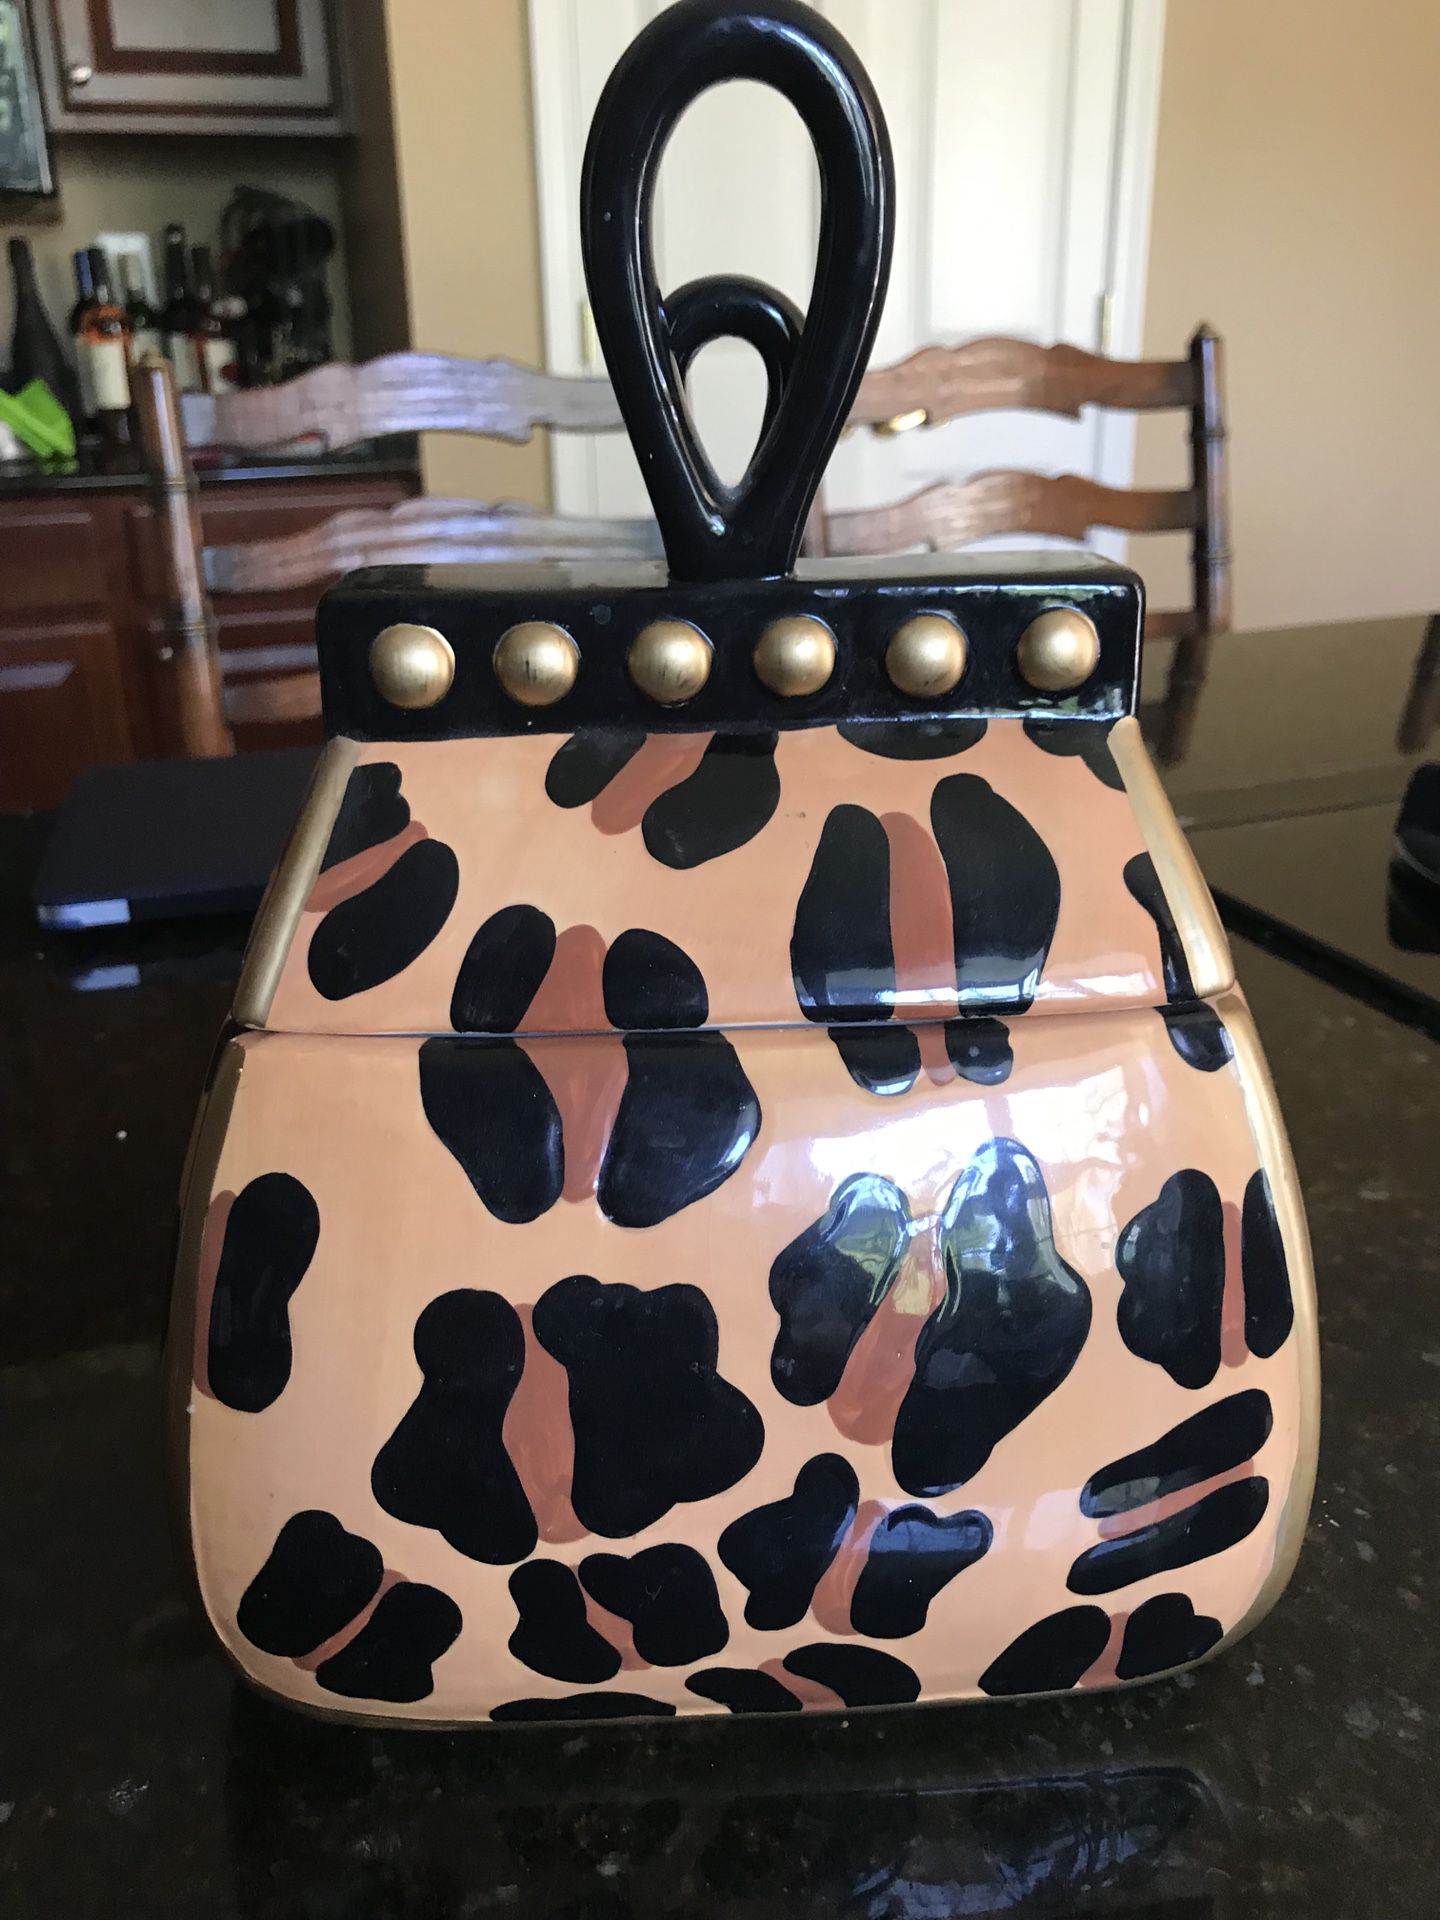 Cookie jar in shape of purse